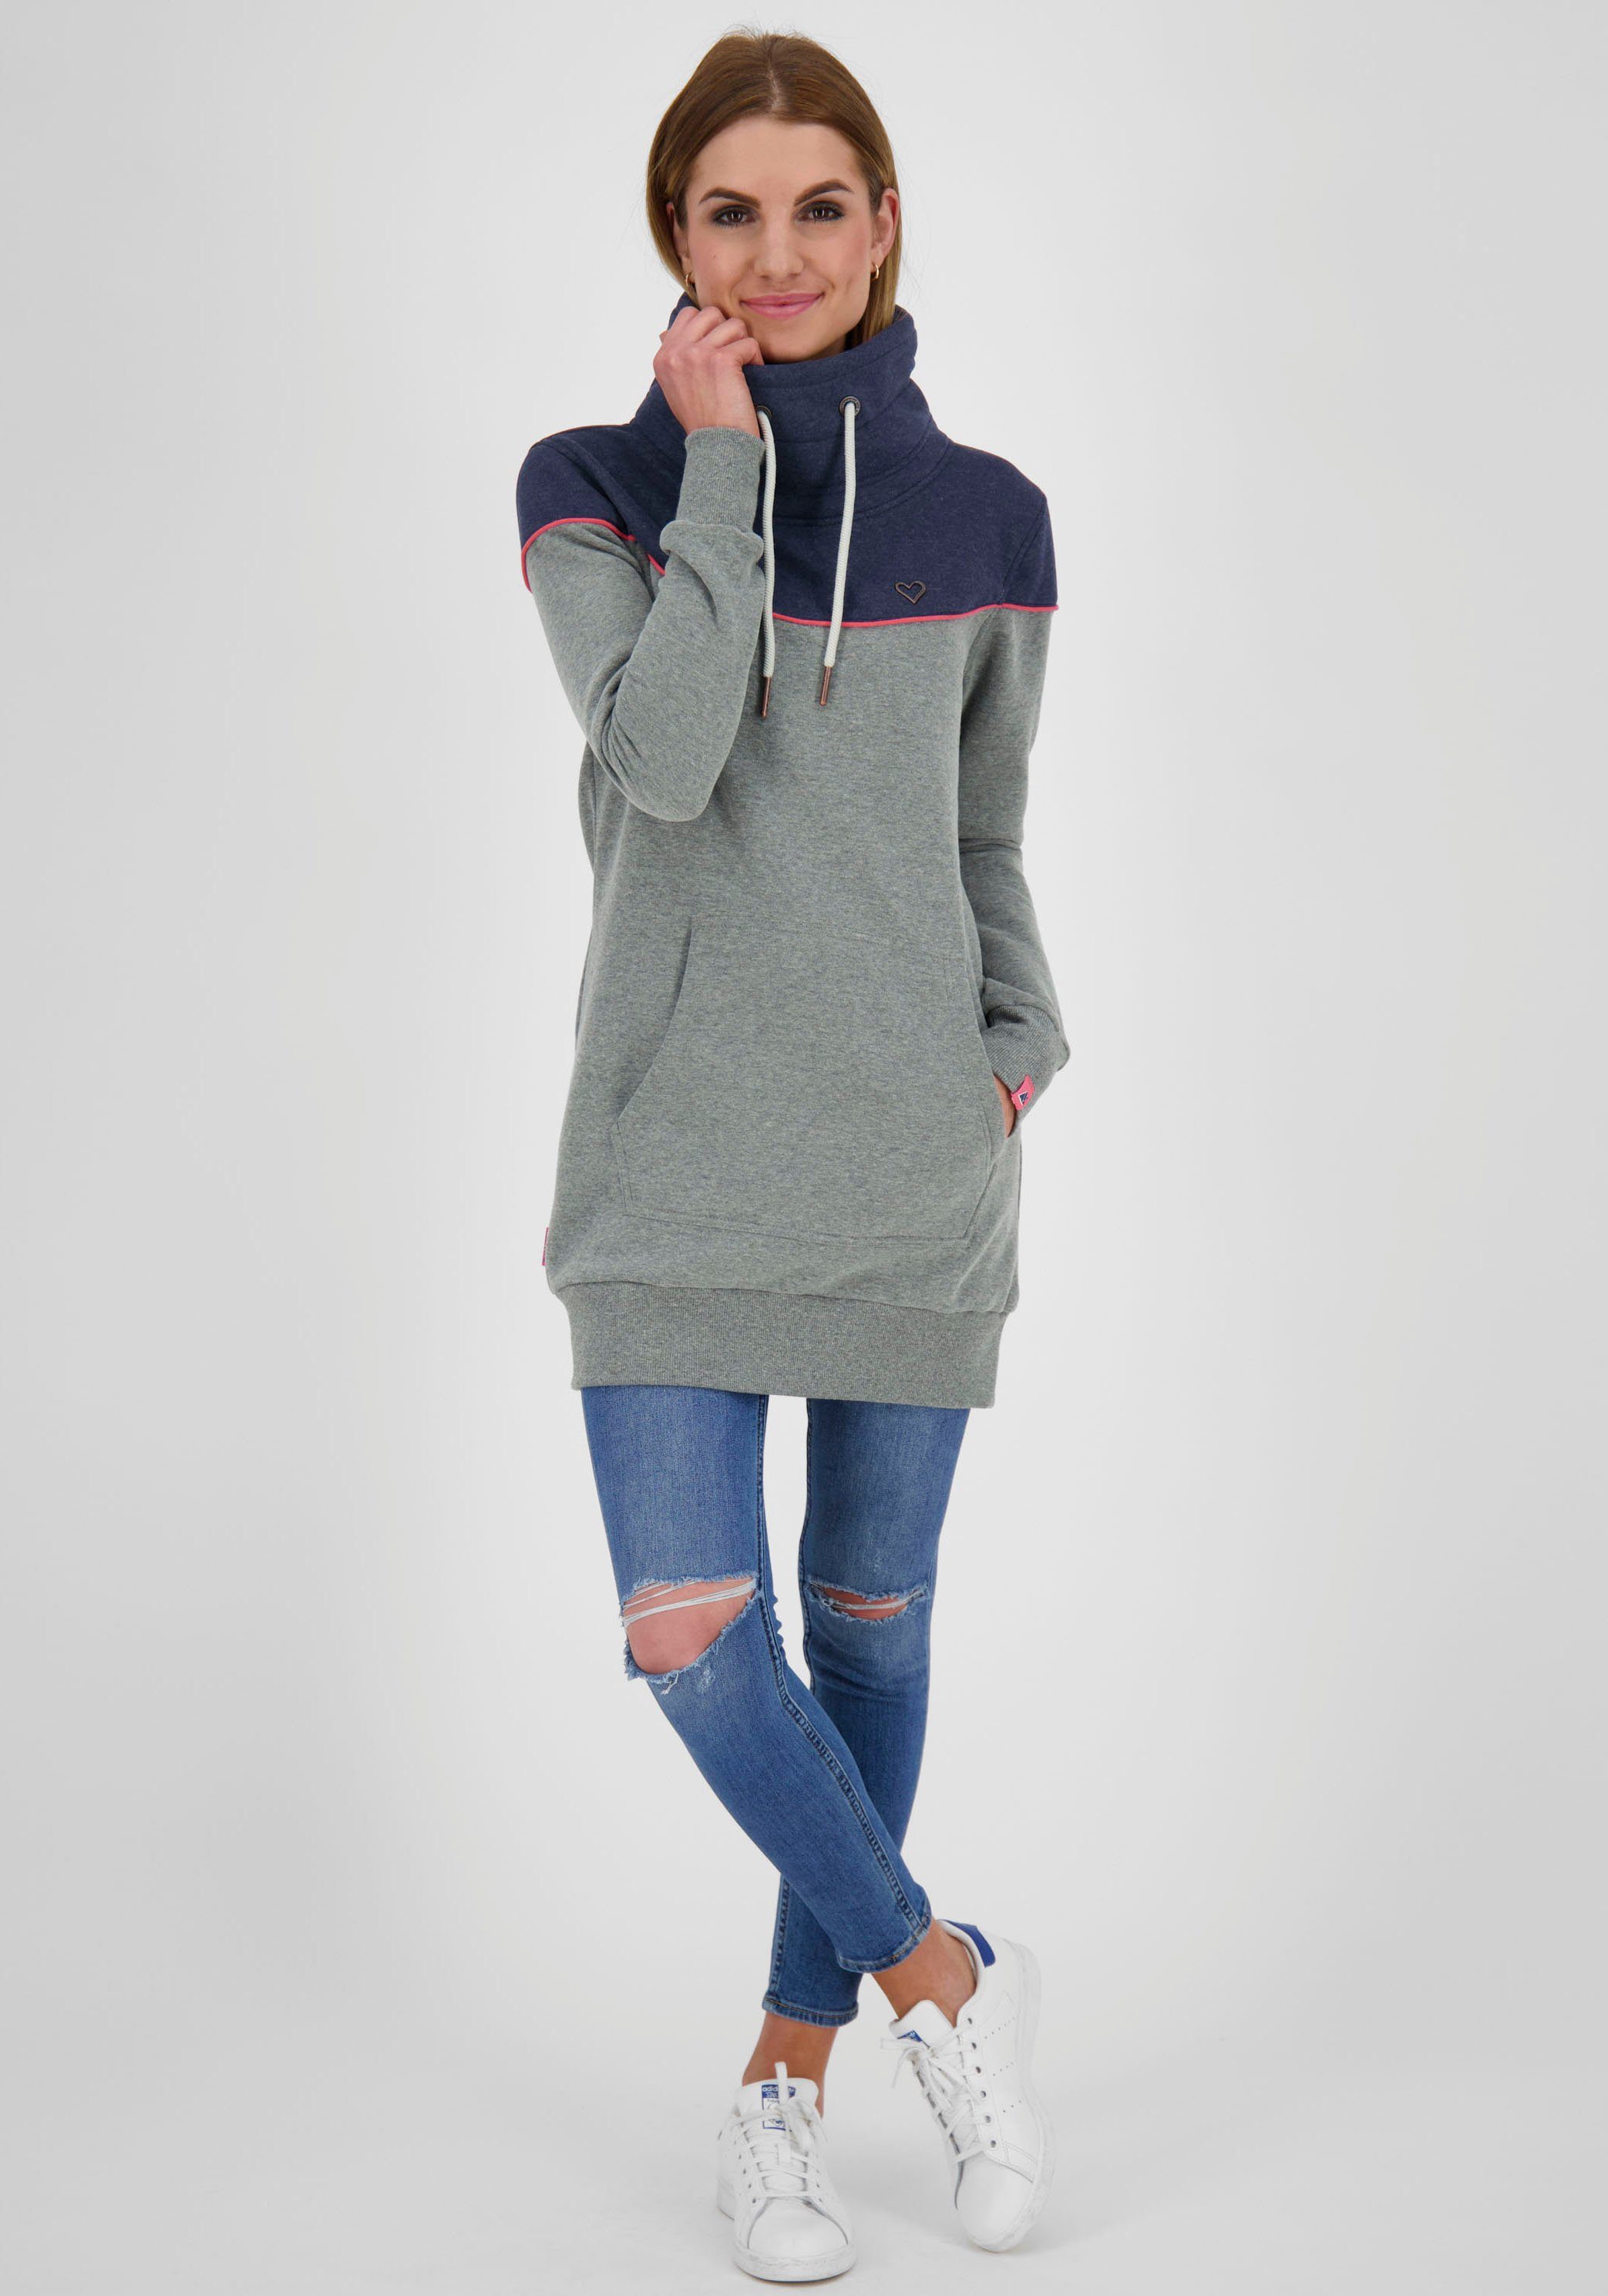 Alife sportiver in Jerseykleid mit & ValaAK langer Kontrastdetails Kickin Sweater Form